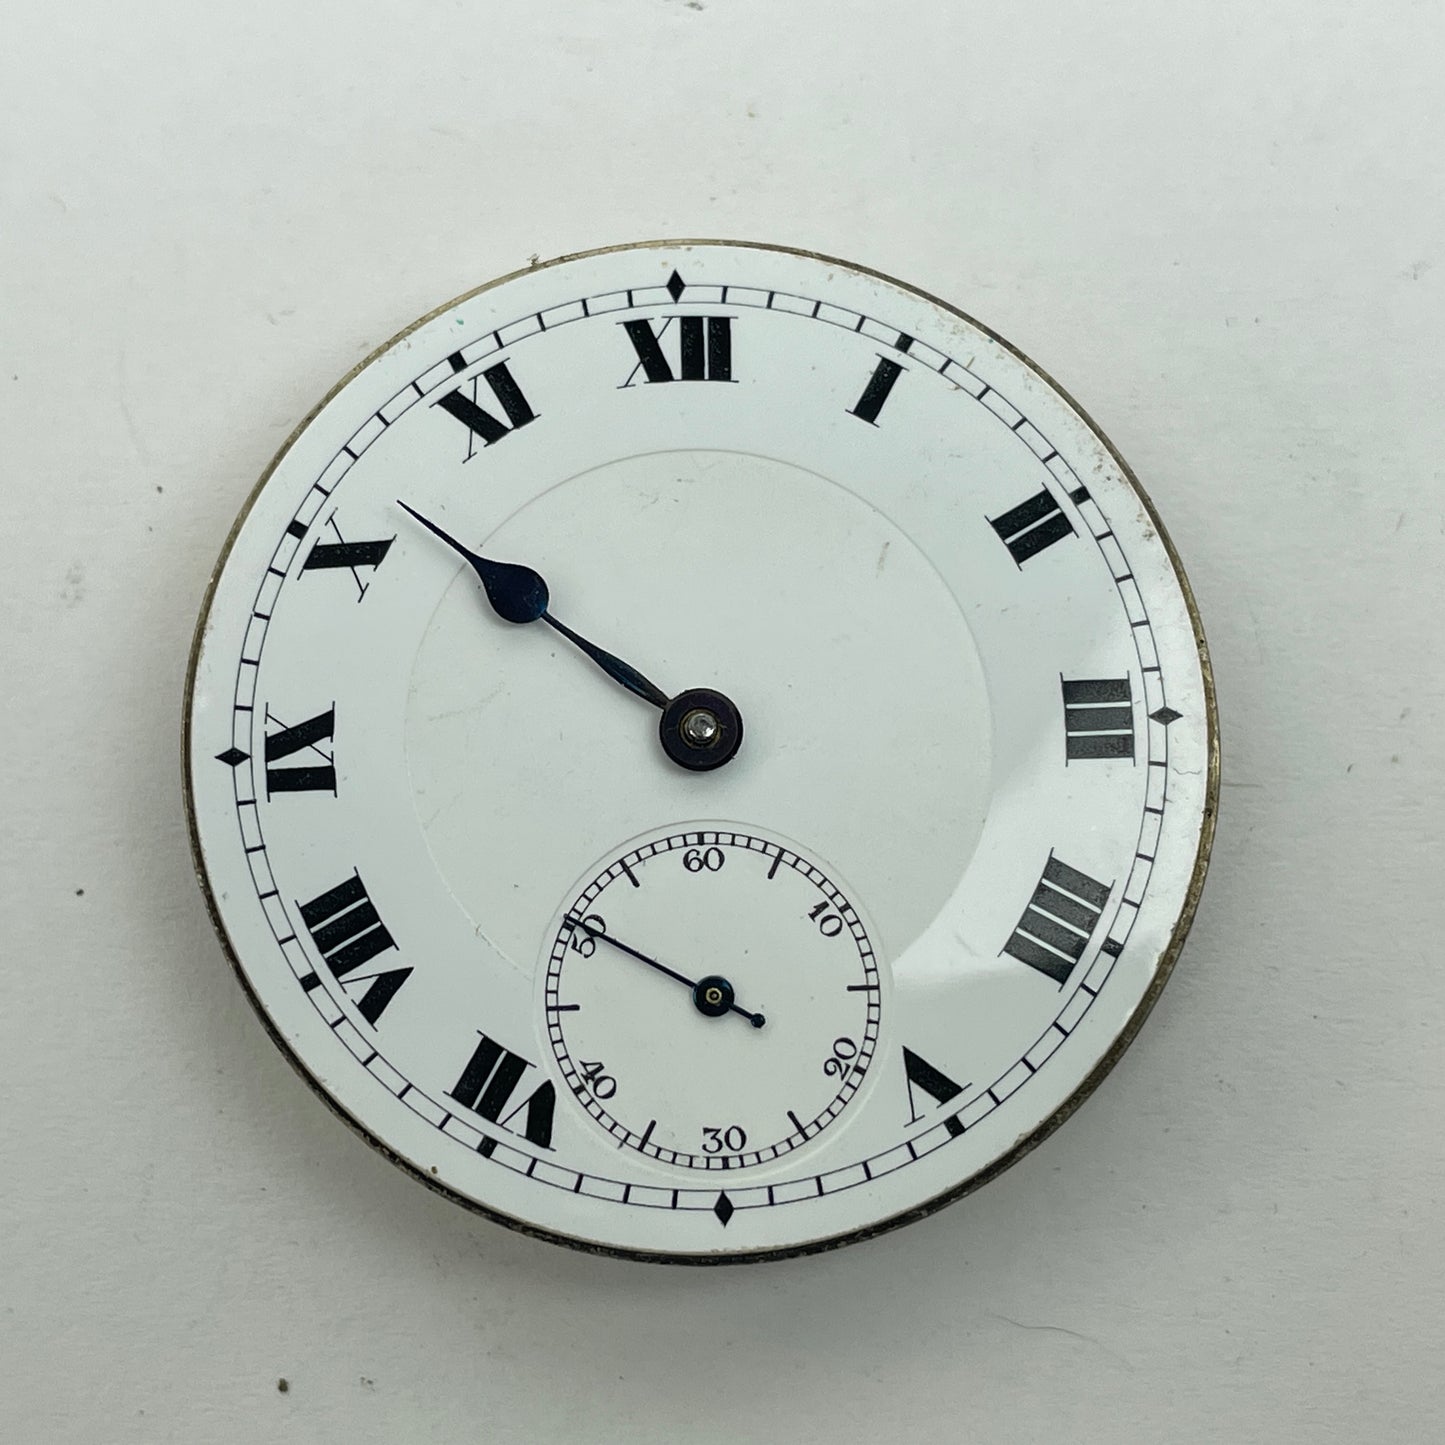 Lot 93- Swiss Assortment of Six Vintage Pocket Watch Movements